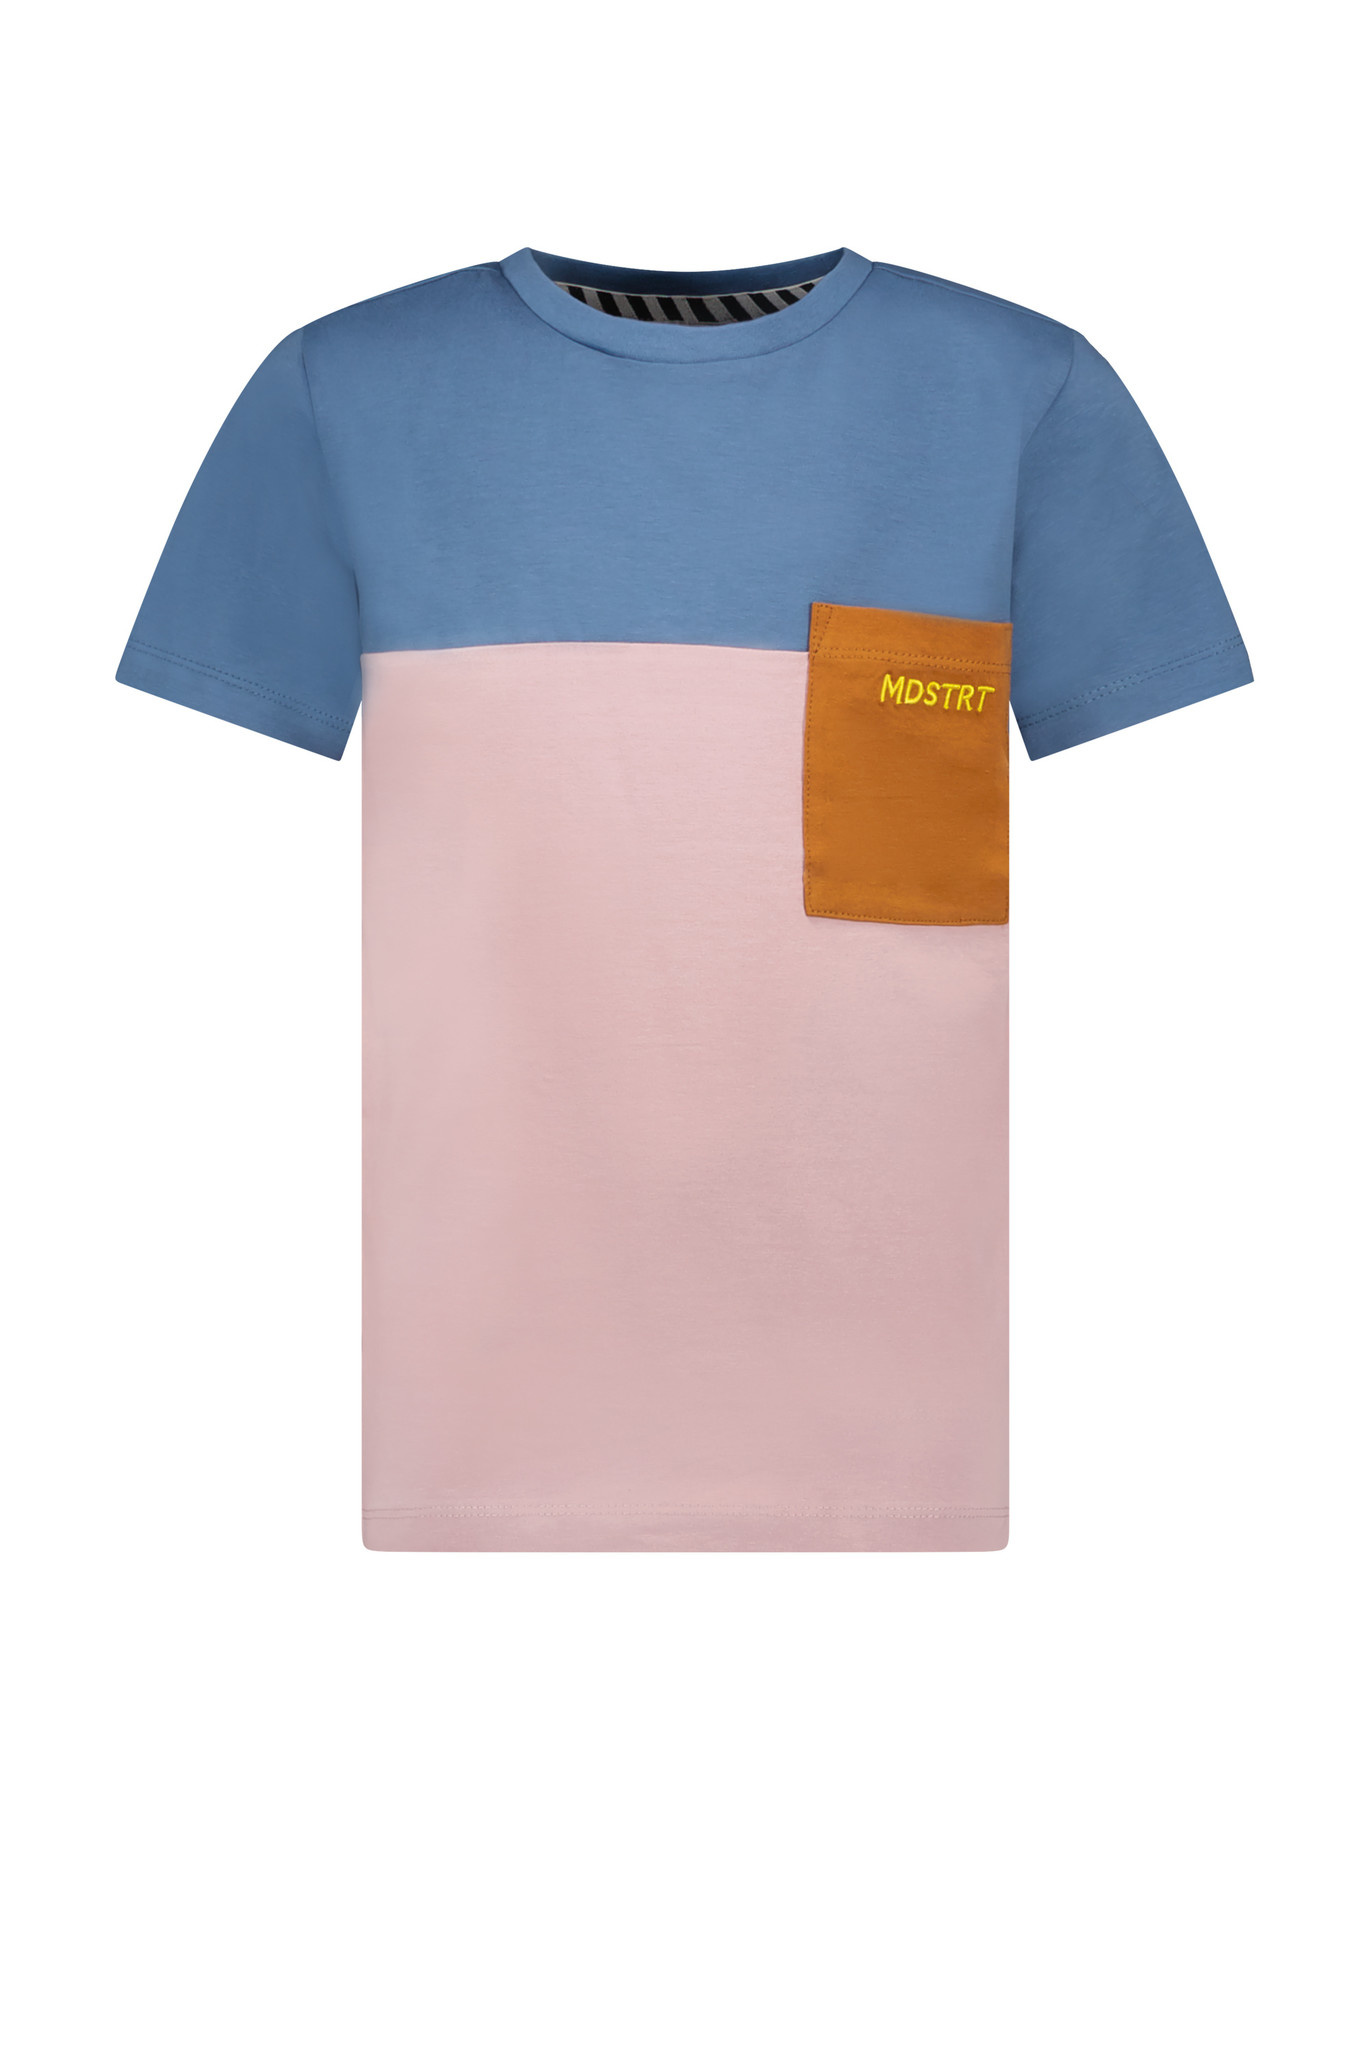 Moodstreet M302-6423 Jongens T-shirt Frost lilac - Maat 110/116